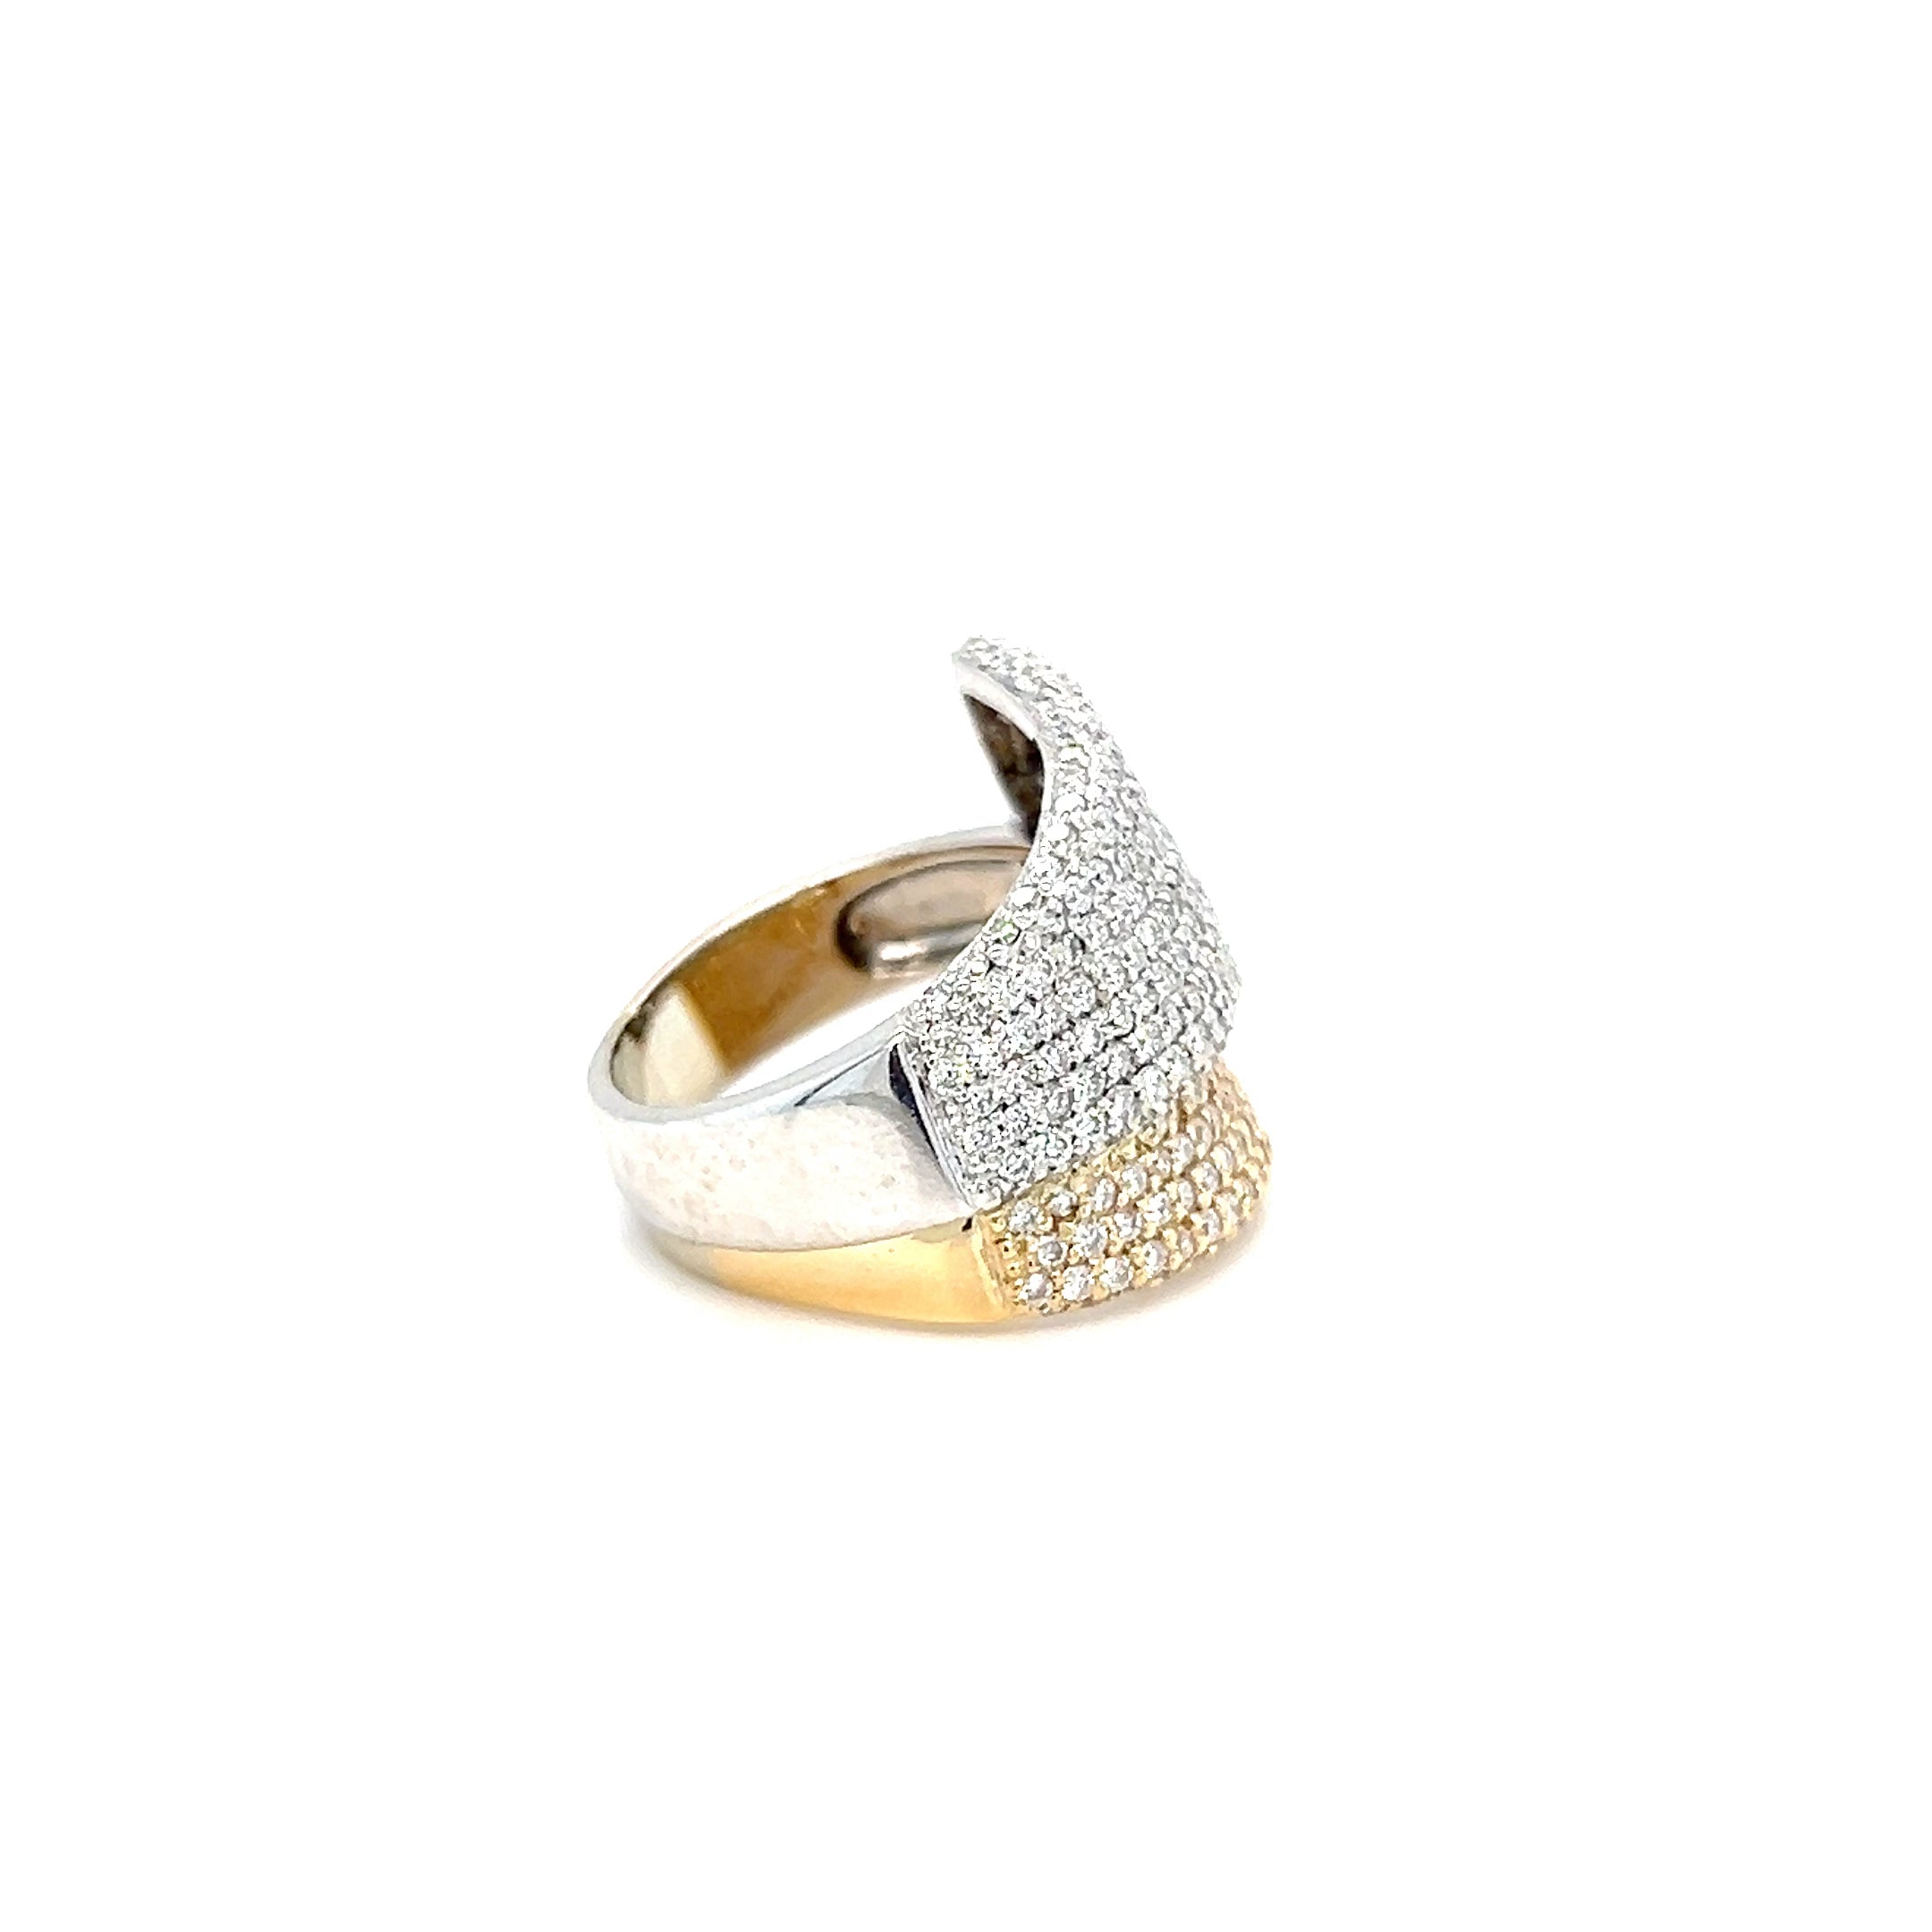 White and Yellow Gold 14k Diamond Ring | I&I Diamonds in Coconut Creek, FL